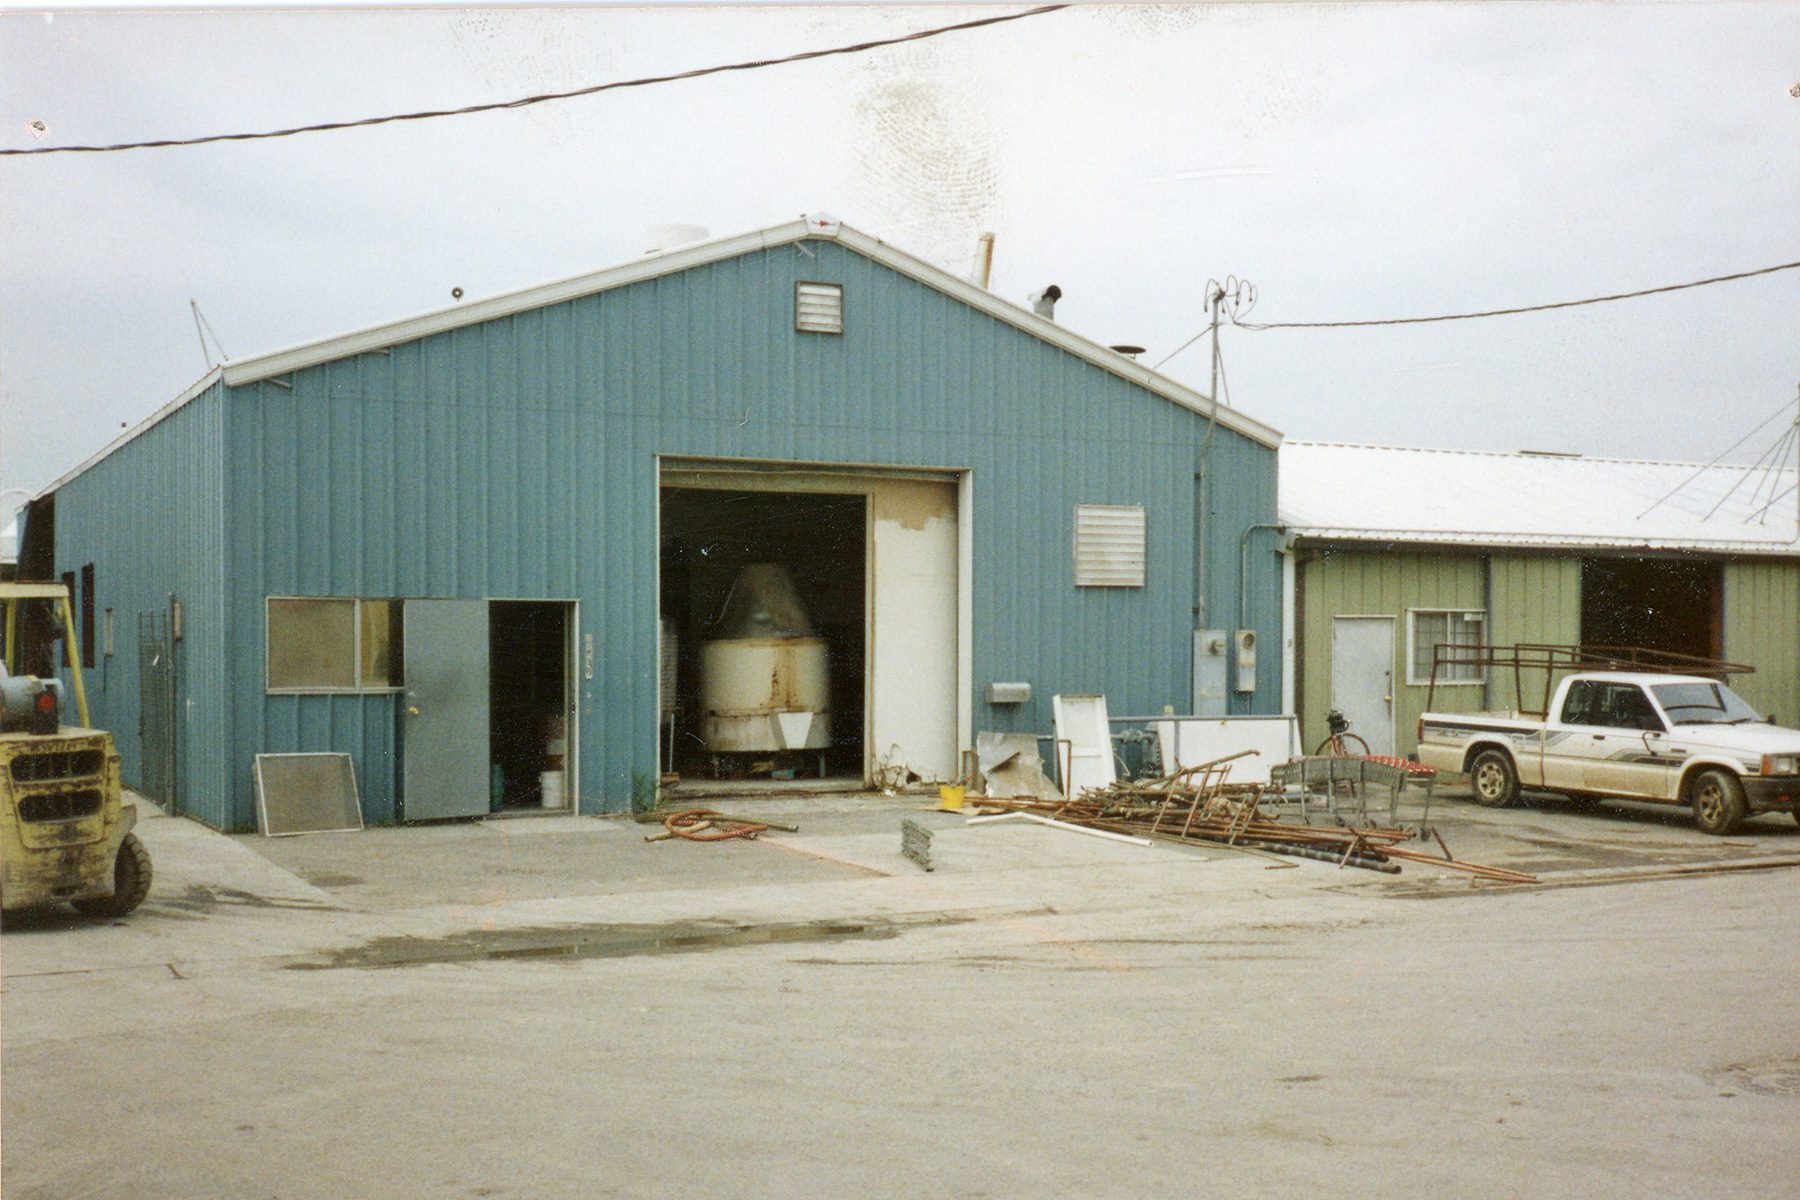 Original Sierra Nevada Brewing Co. brewhouse circa 1980